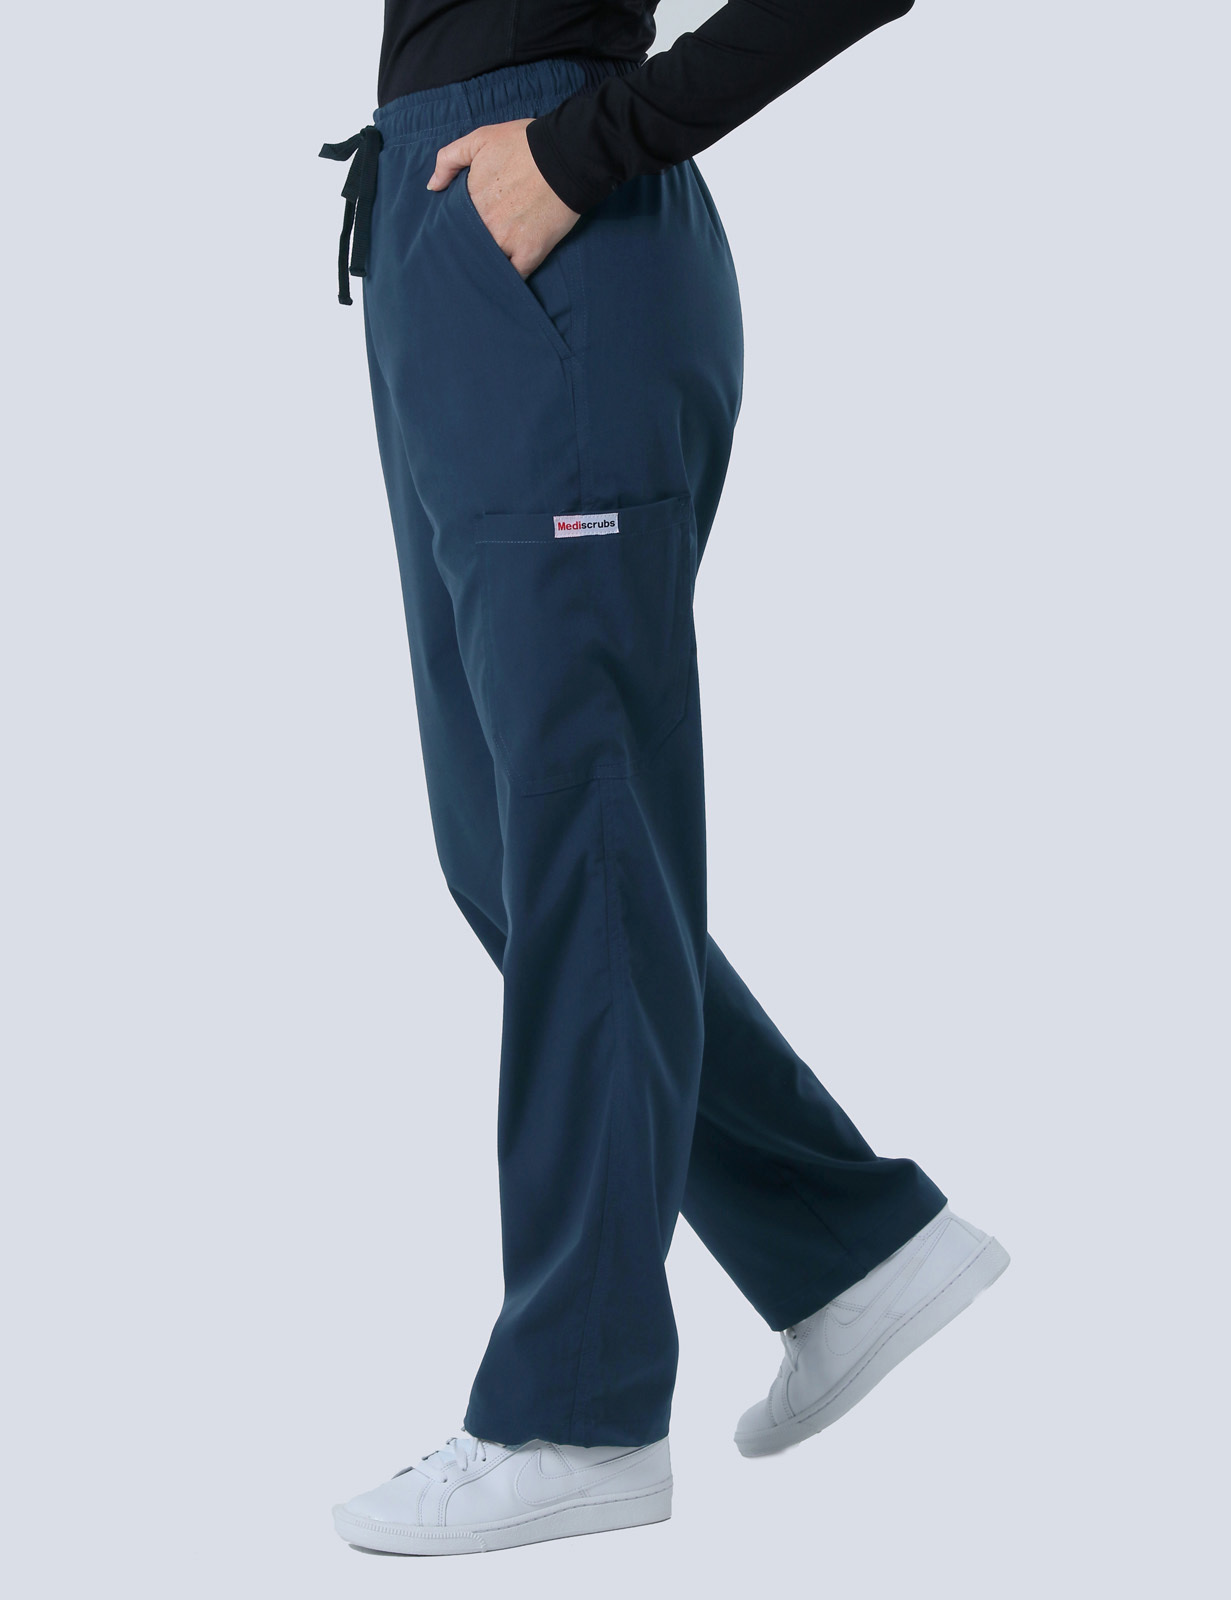 Royal Hobart Hospital Emergency Department Specialist Uniform Bundle Set (4 Pocket Top and Cargo Pants in Navy incl Logo)